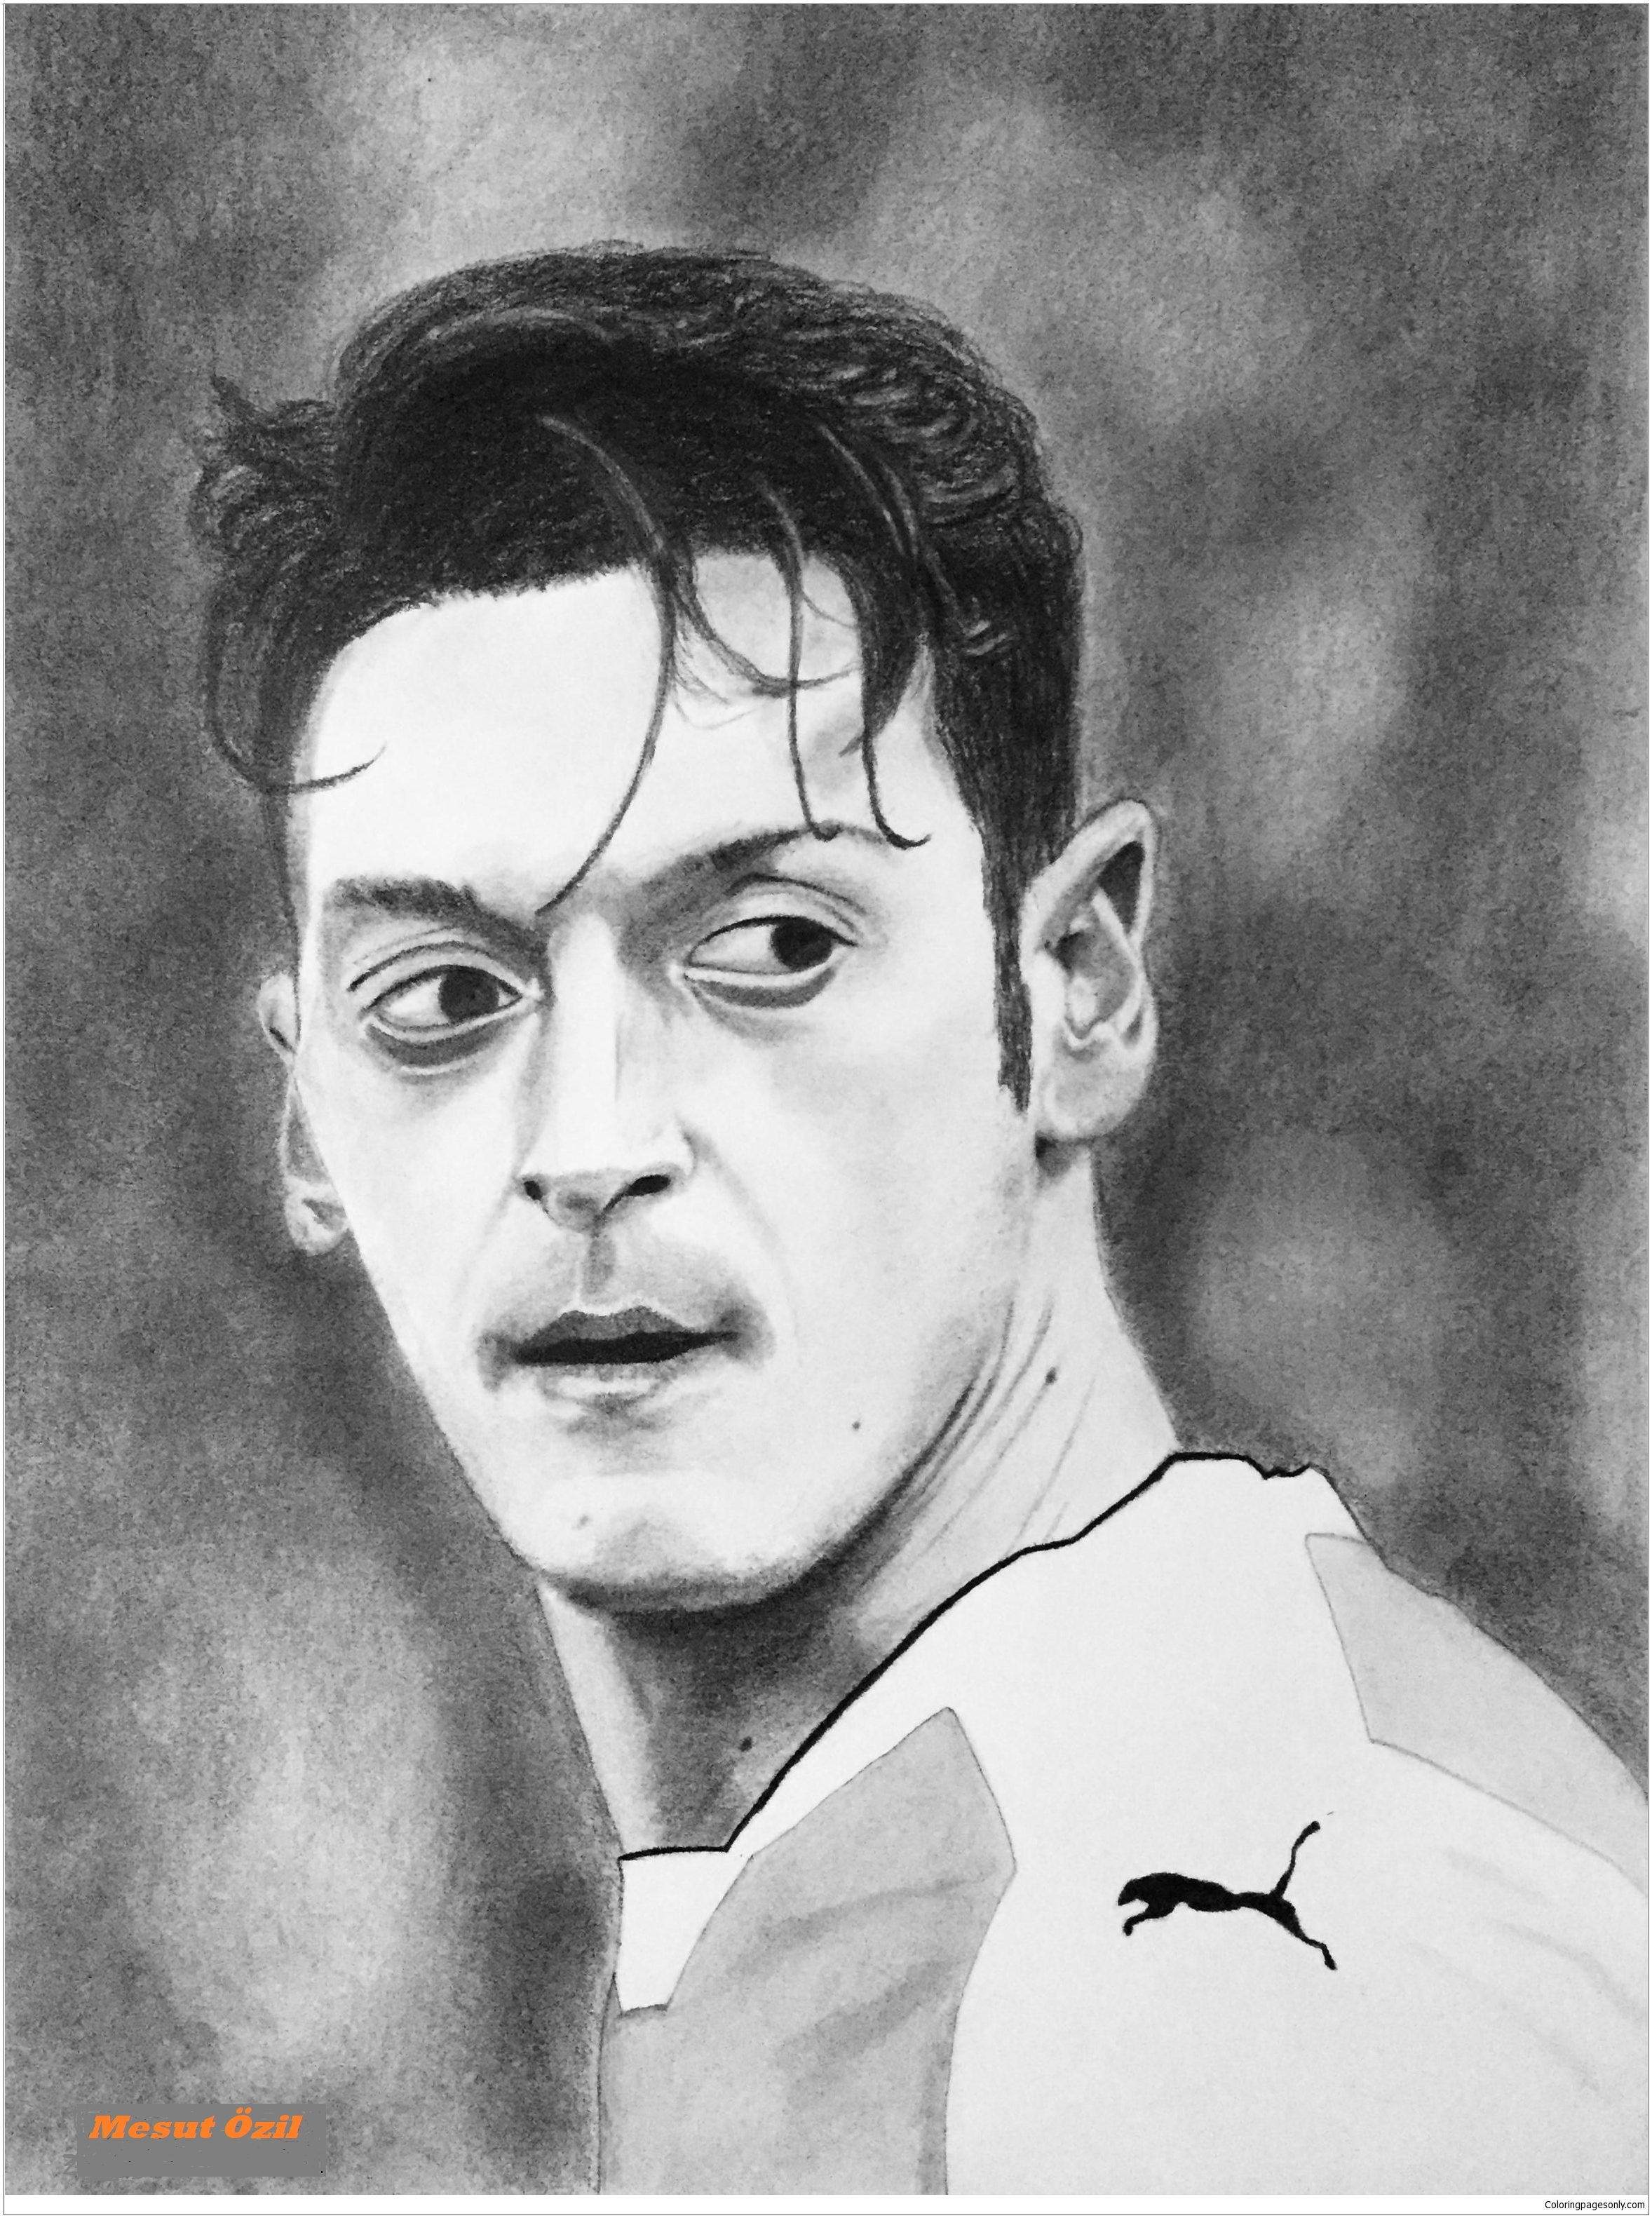 Mesut Özil-Bild 2 von Mesut Özil